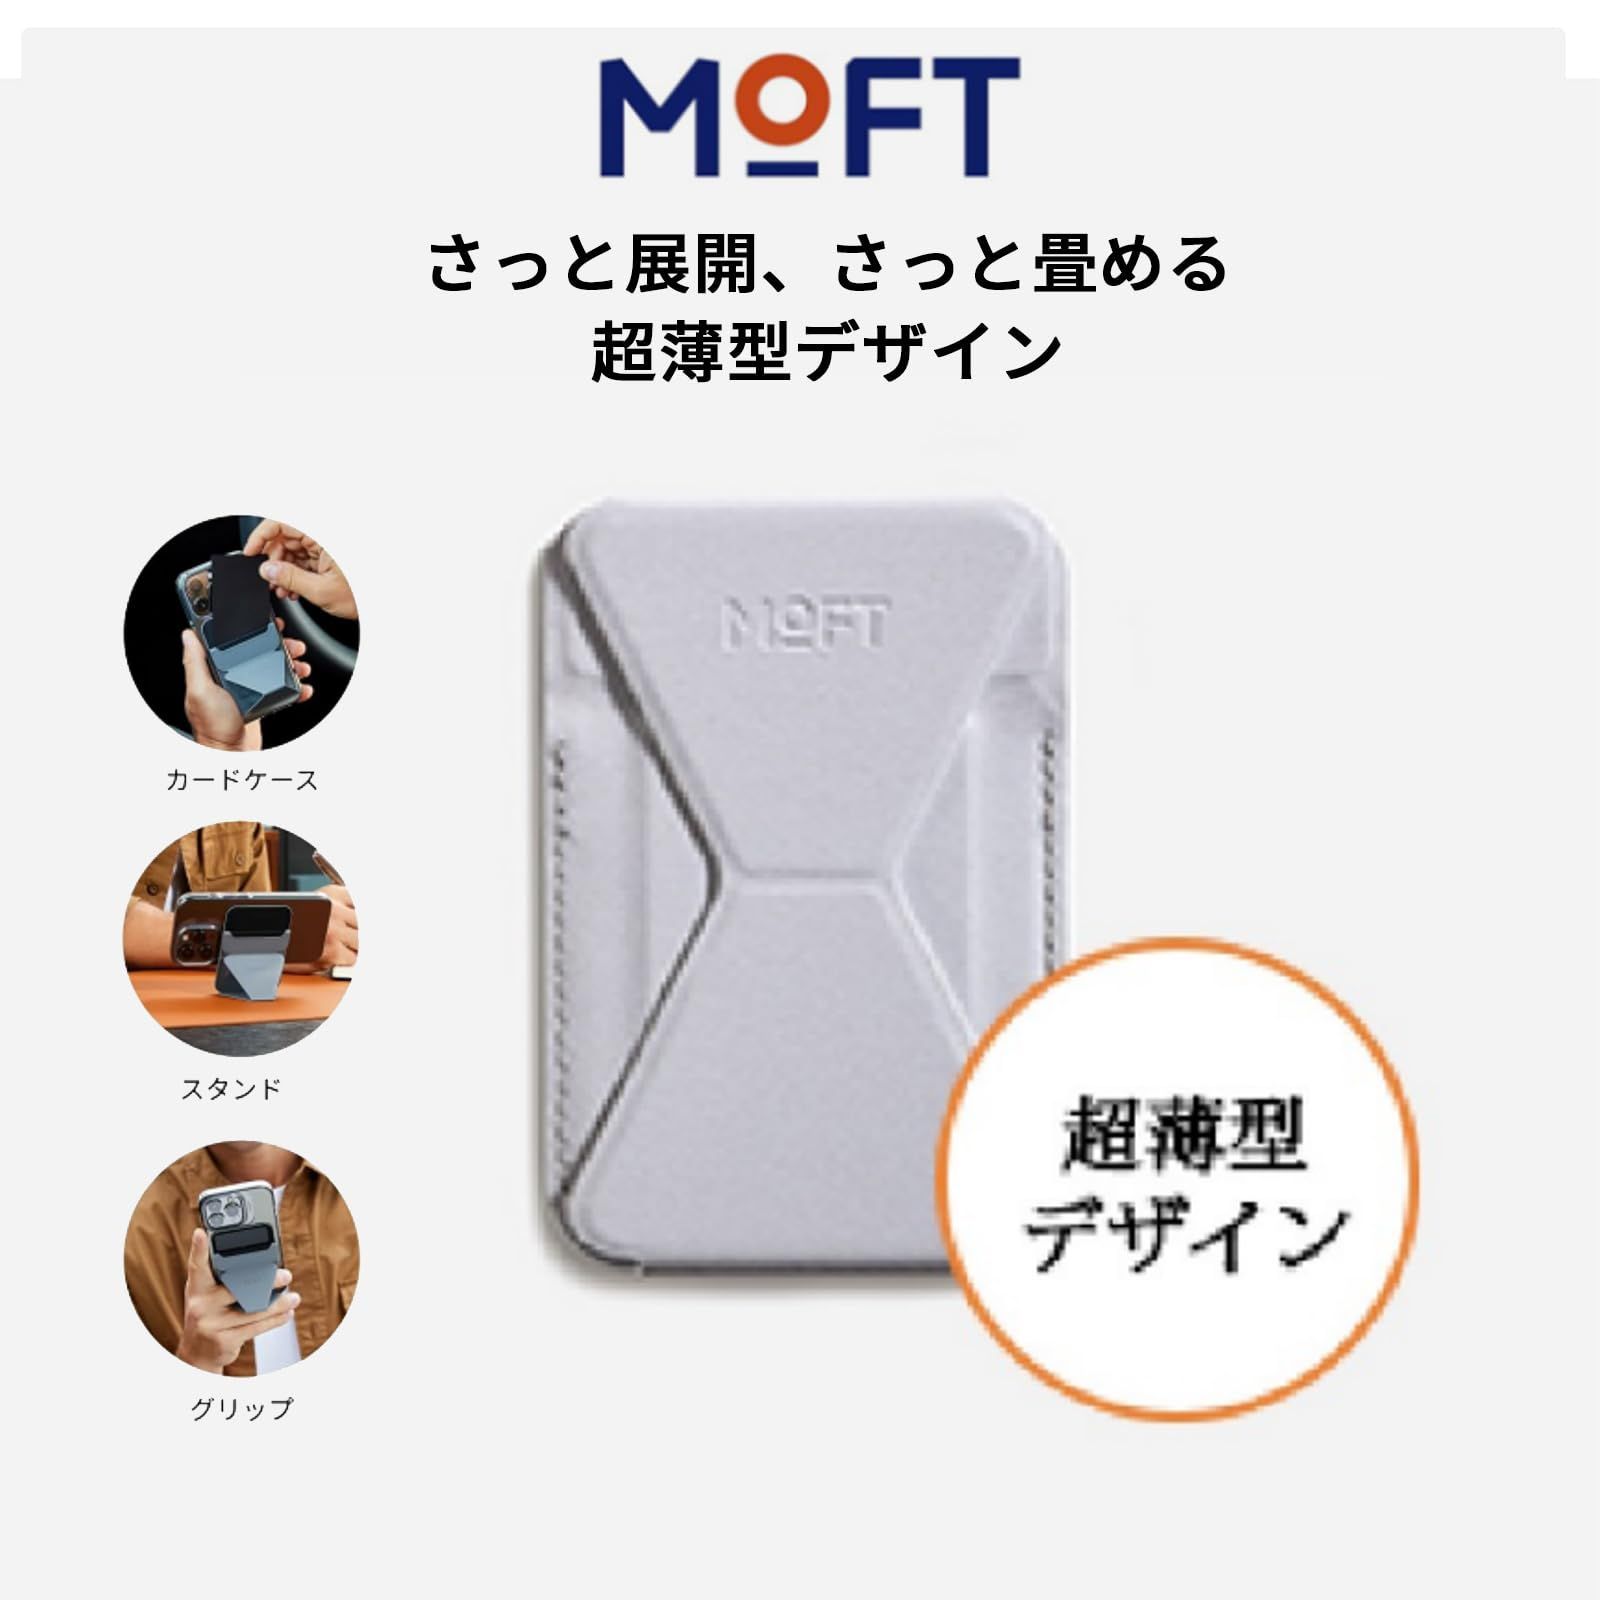 MOFT snap-on スマホスタンド MagSafe対応 ジェットブラック